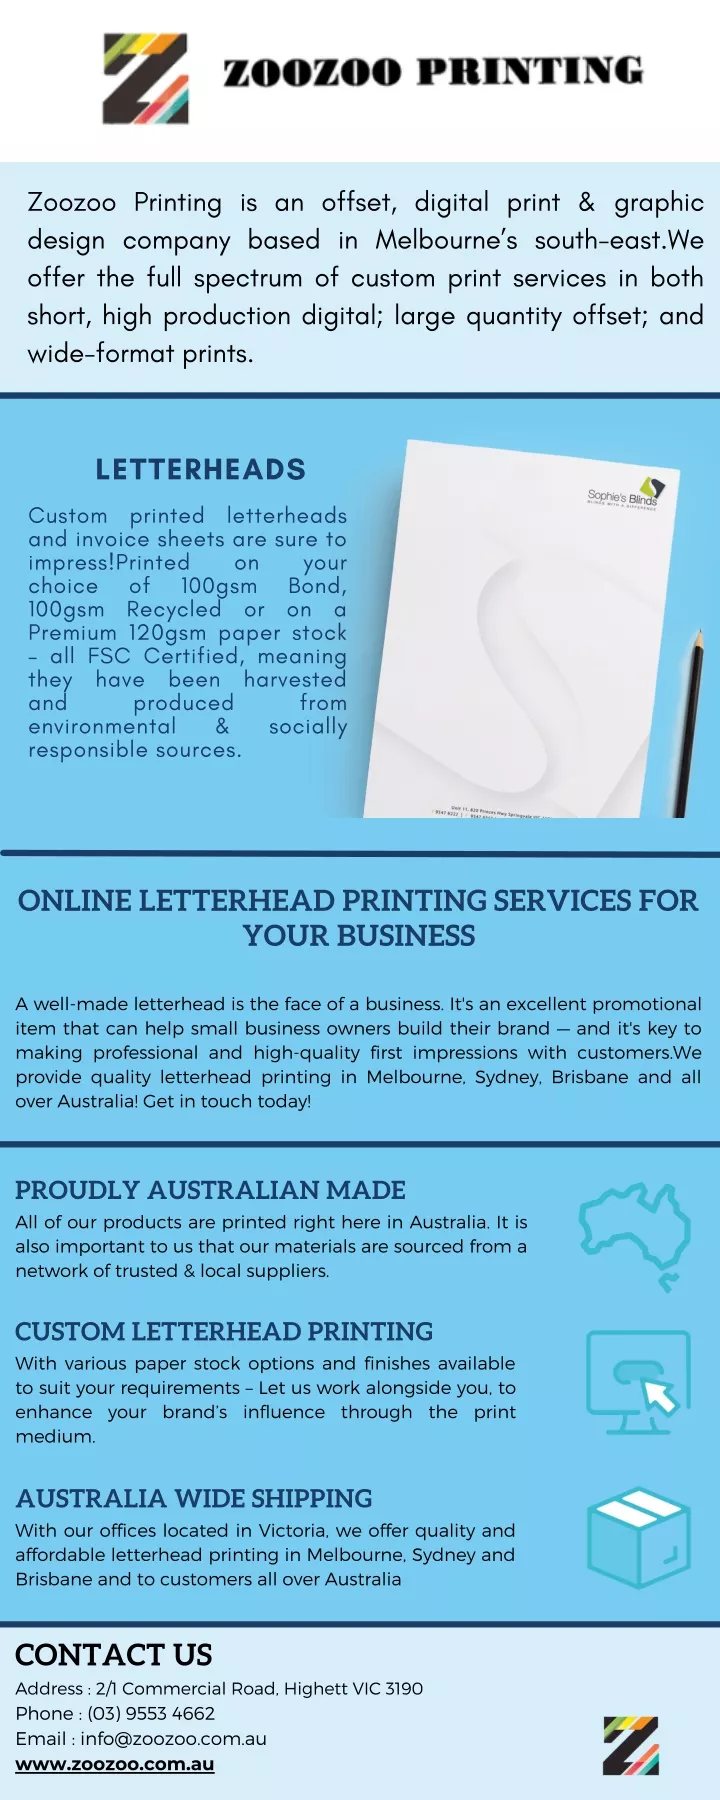 zoozoo printing is an offset digital print